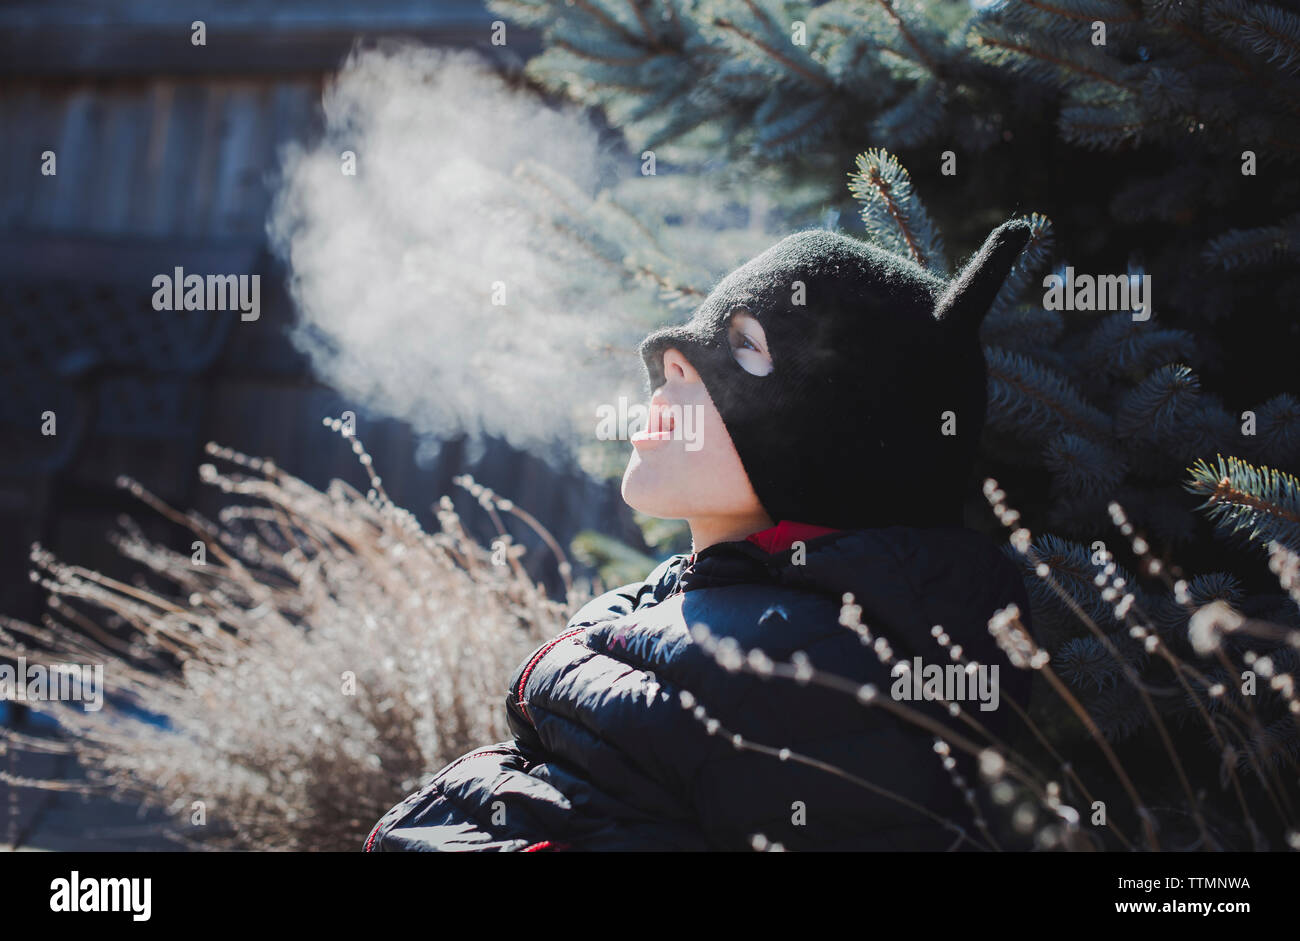 Playful boy wearing knit hat while exhaling breath vapor at yard Stock Photo